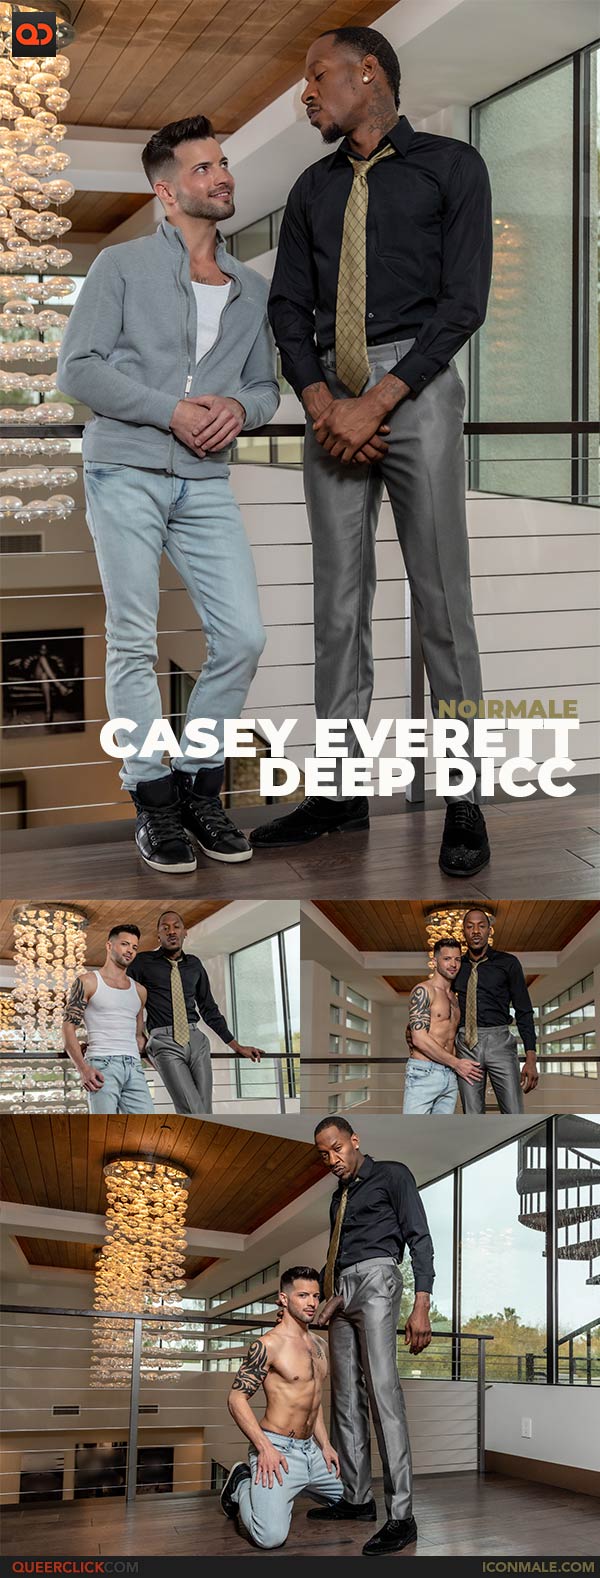 NoirMale: Deep Dicc and Casey Everett